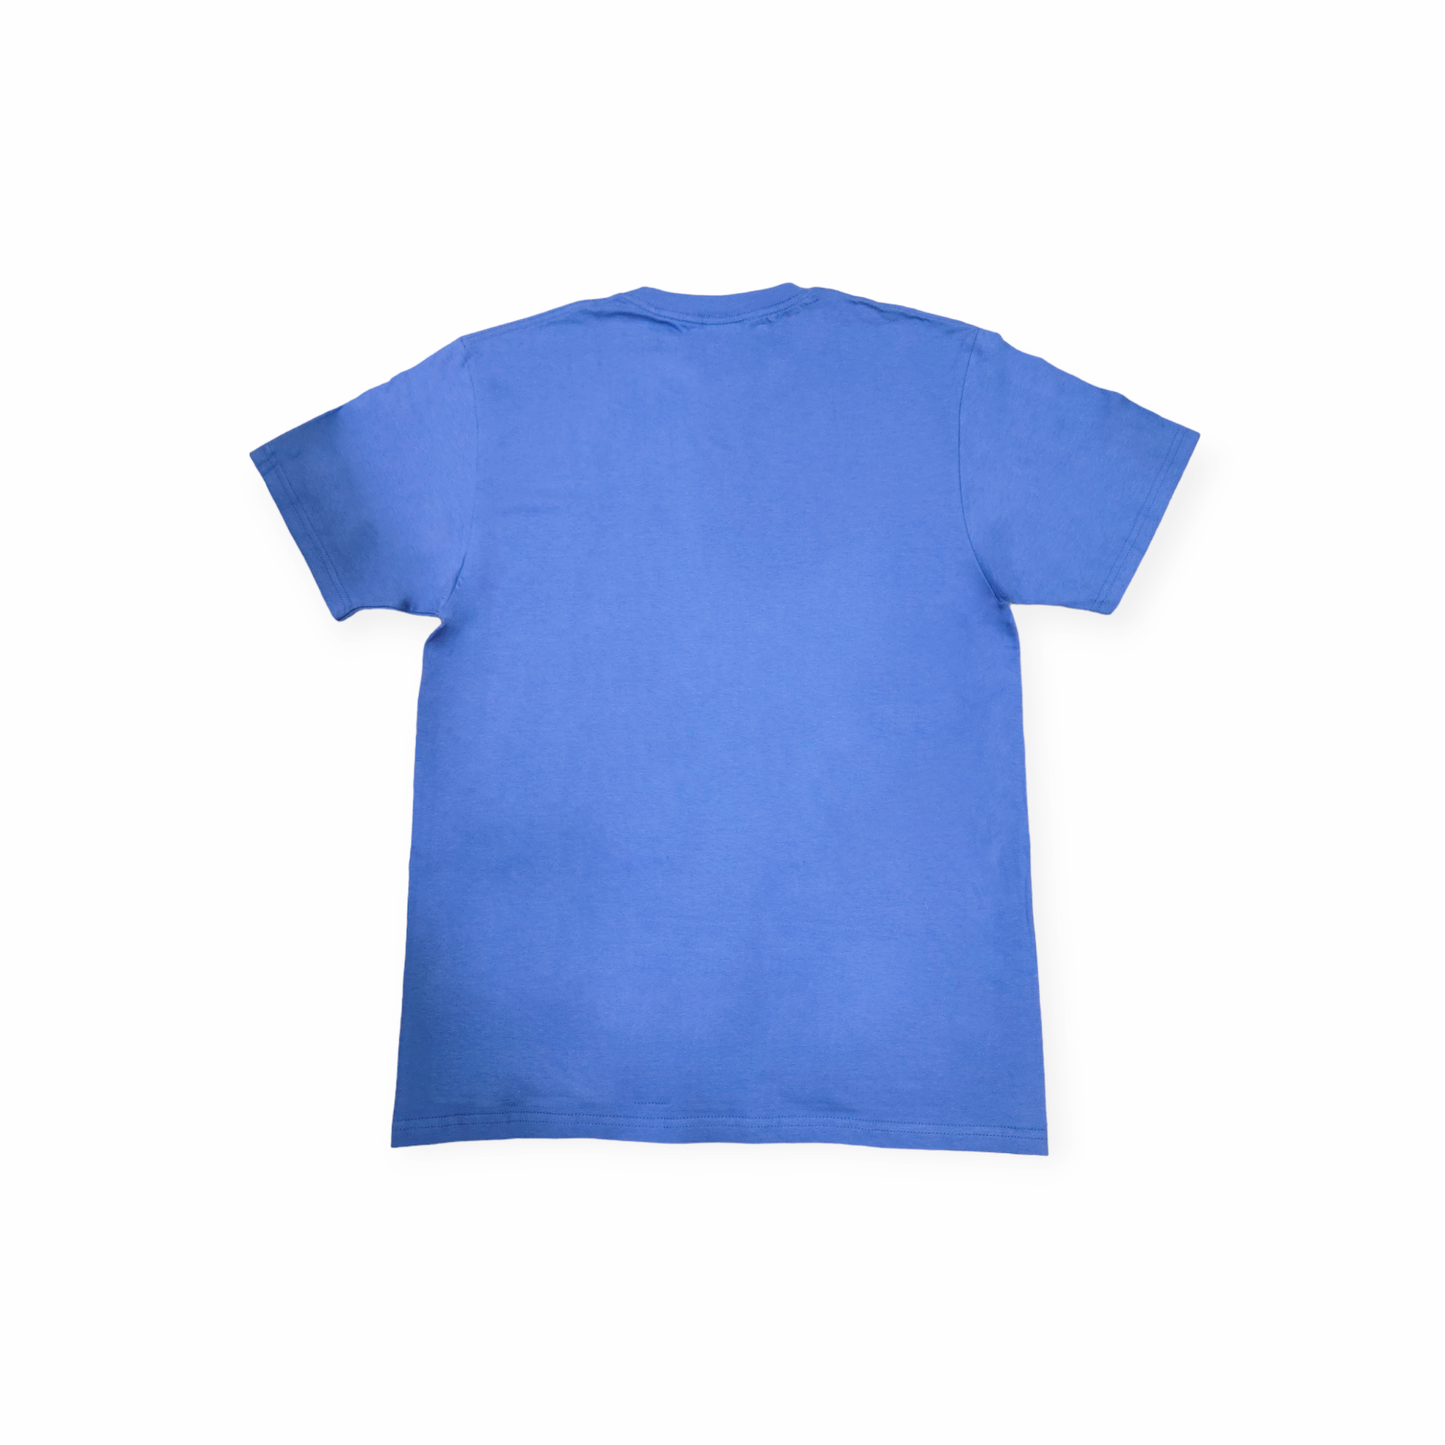 The Stained Brain - Brilliant New Era Unisex T-Shirt